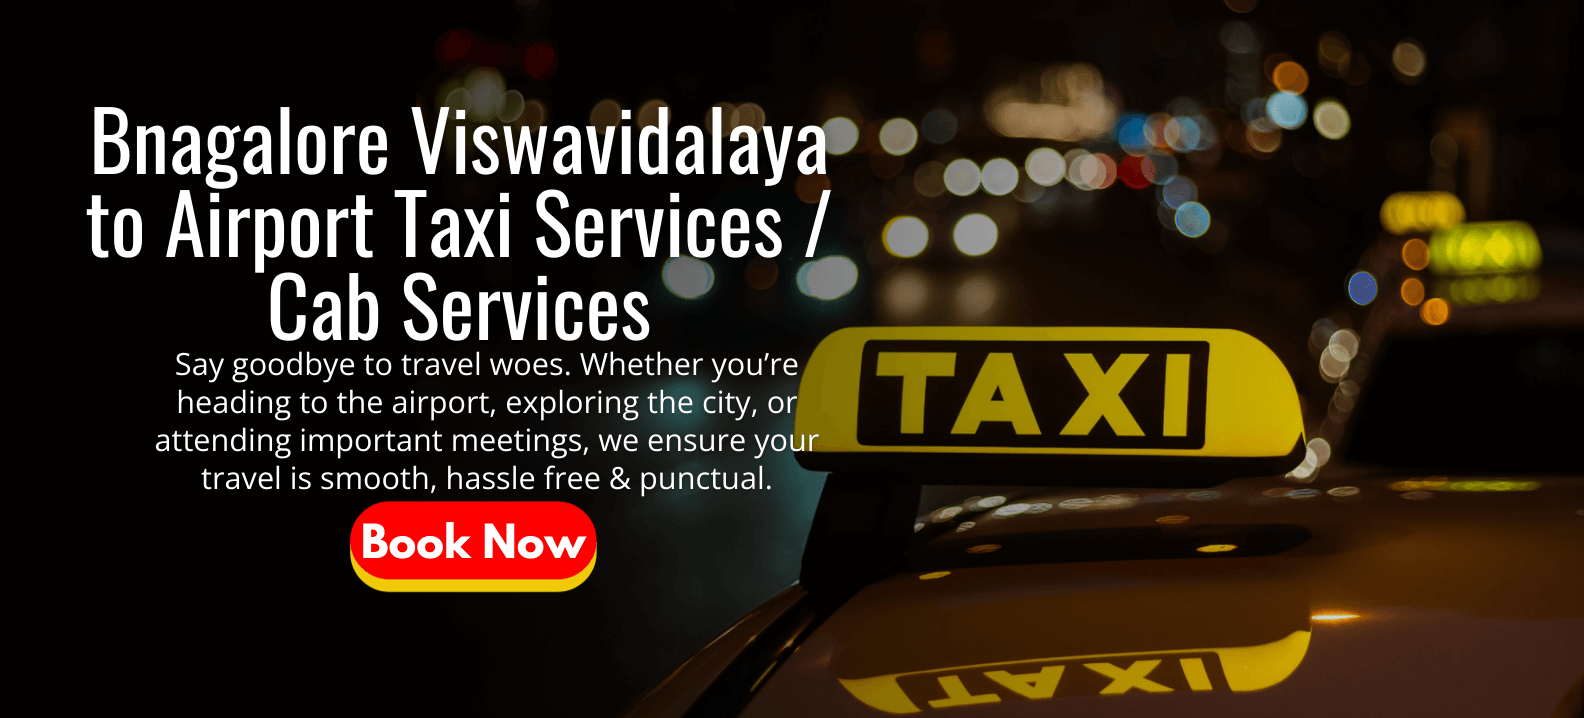 Bnagalore Viswavidalaya to Airport Taxi Services _ Cab Services